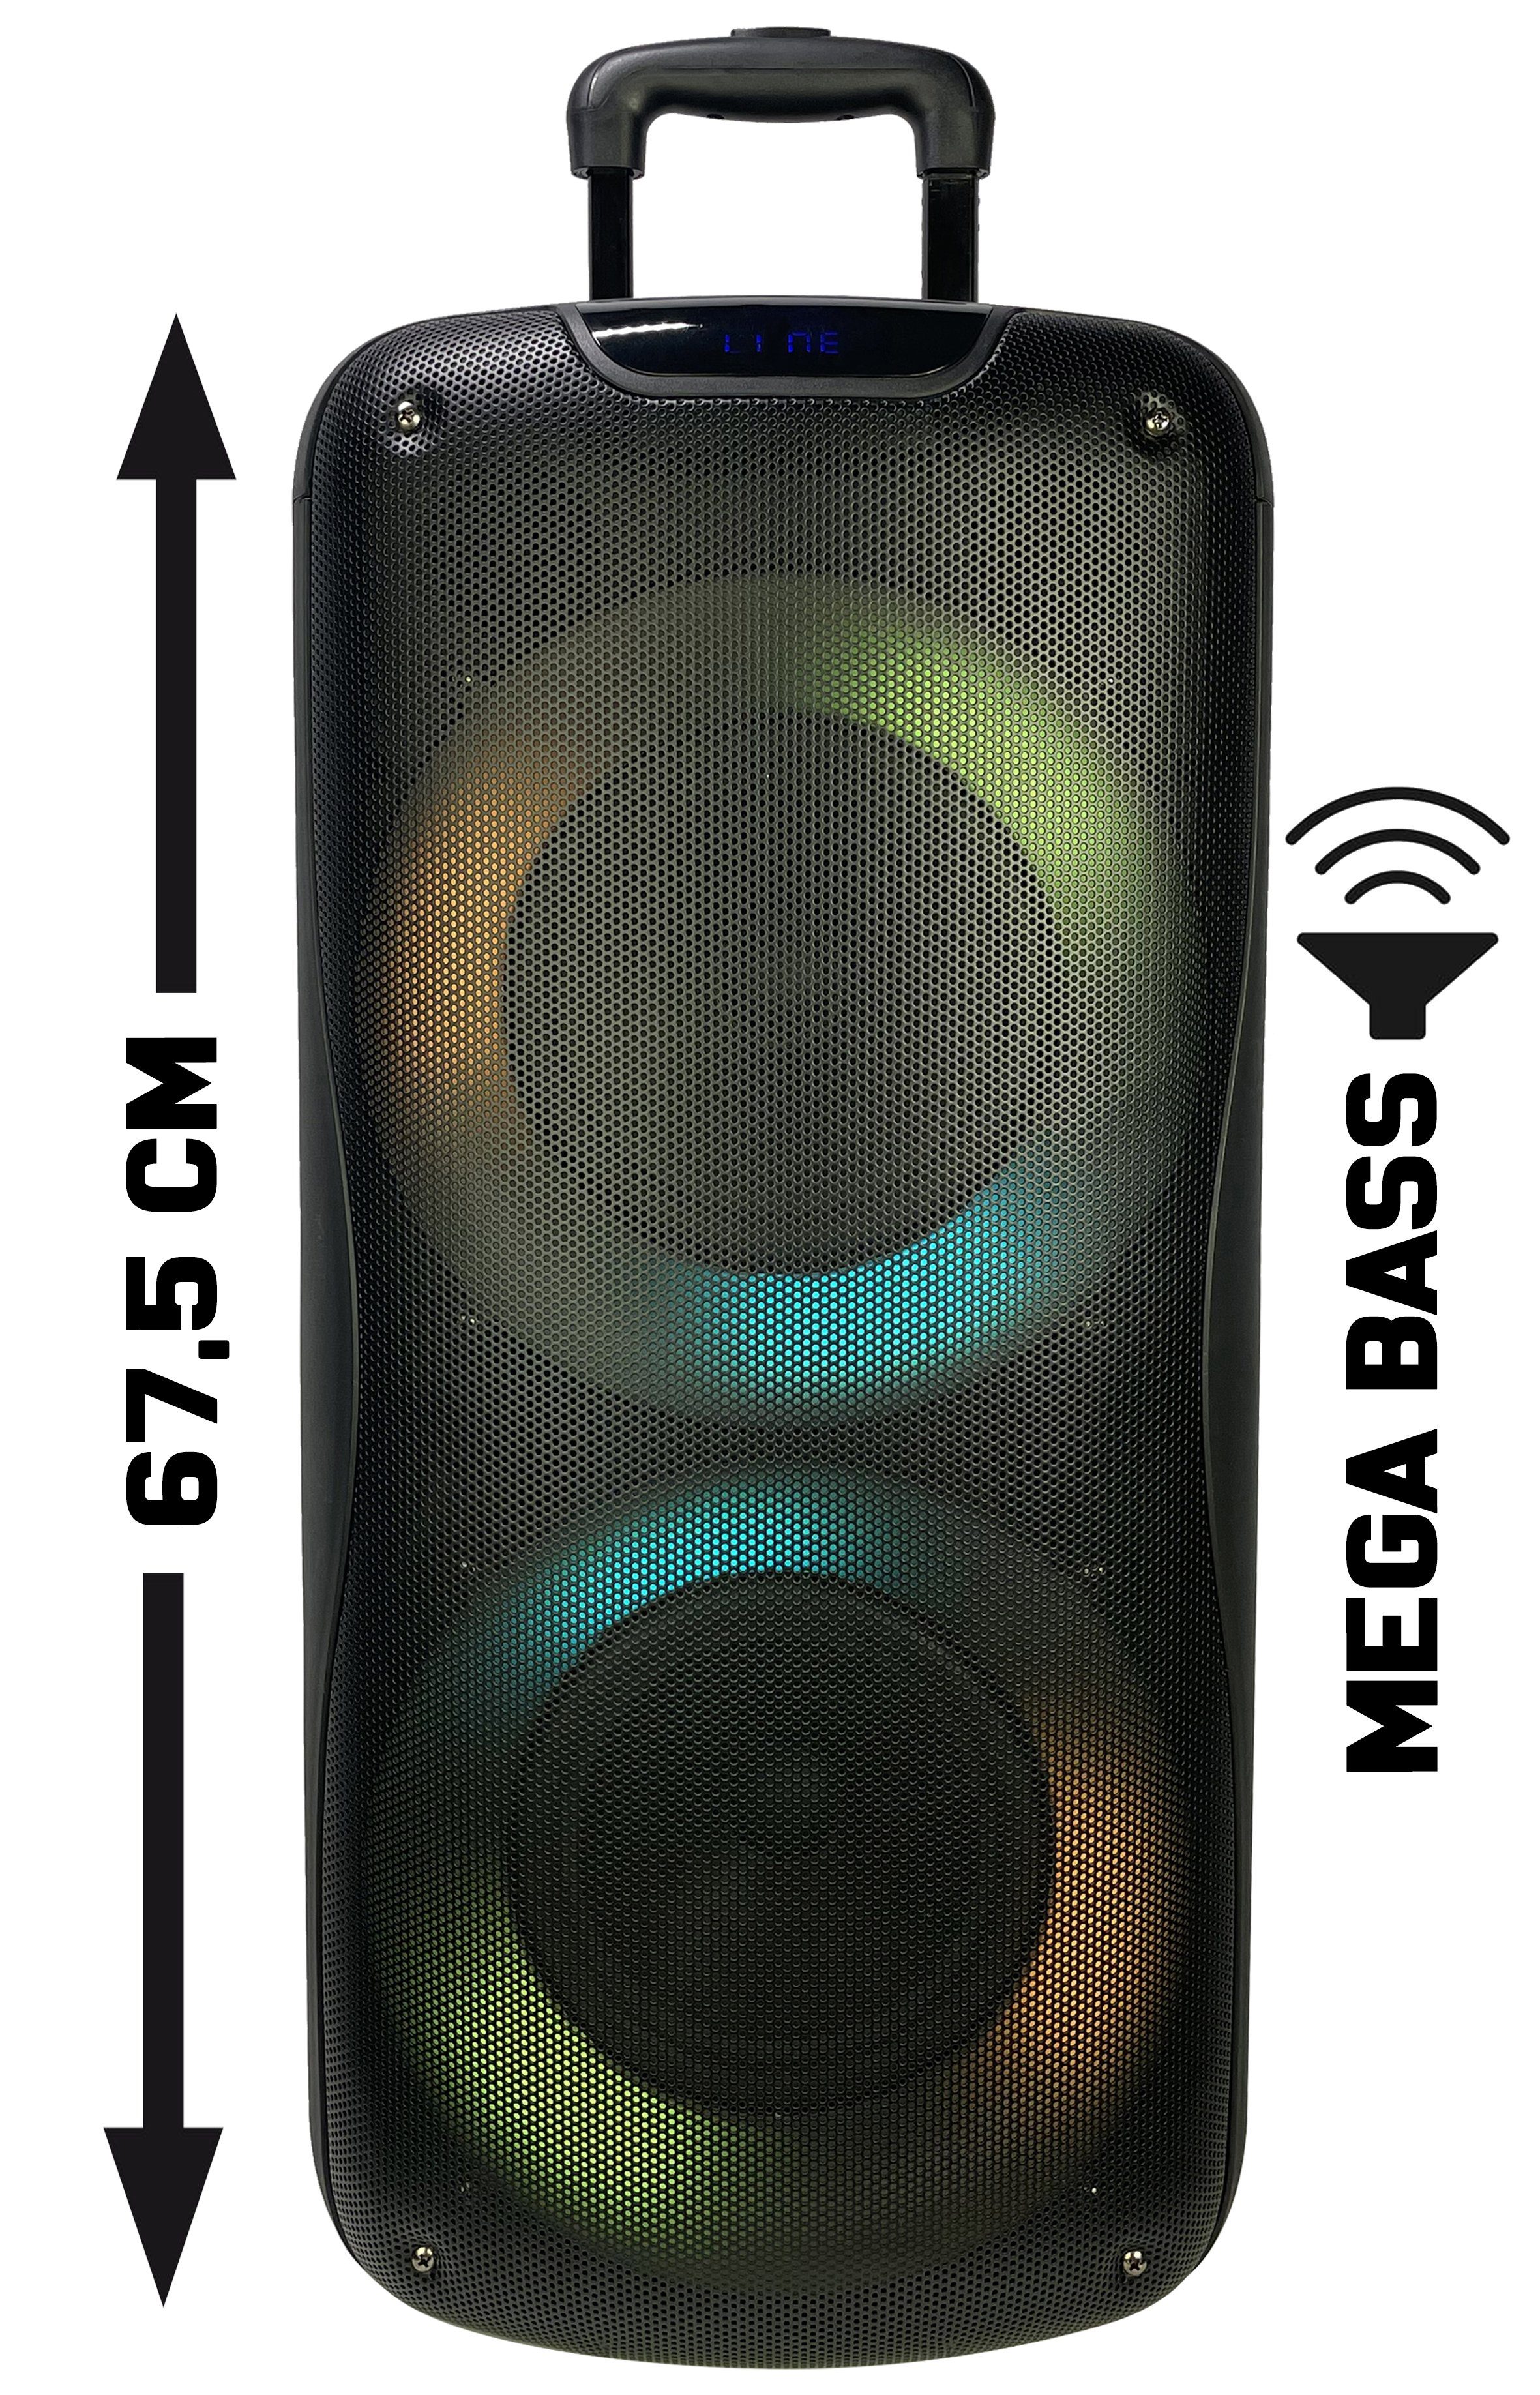 W, 2 Party-Lautsprecher JTC Mega hochauflösender LED Bass) (100 Bluetooth, LSPY829 Klang, Lichtkreise,